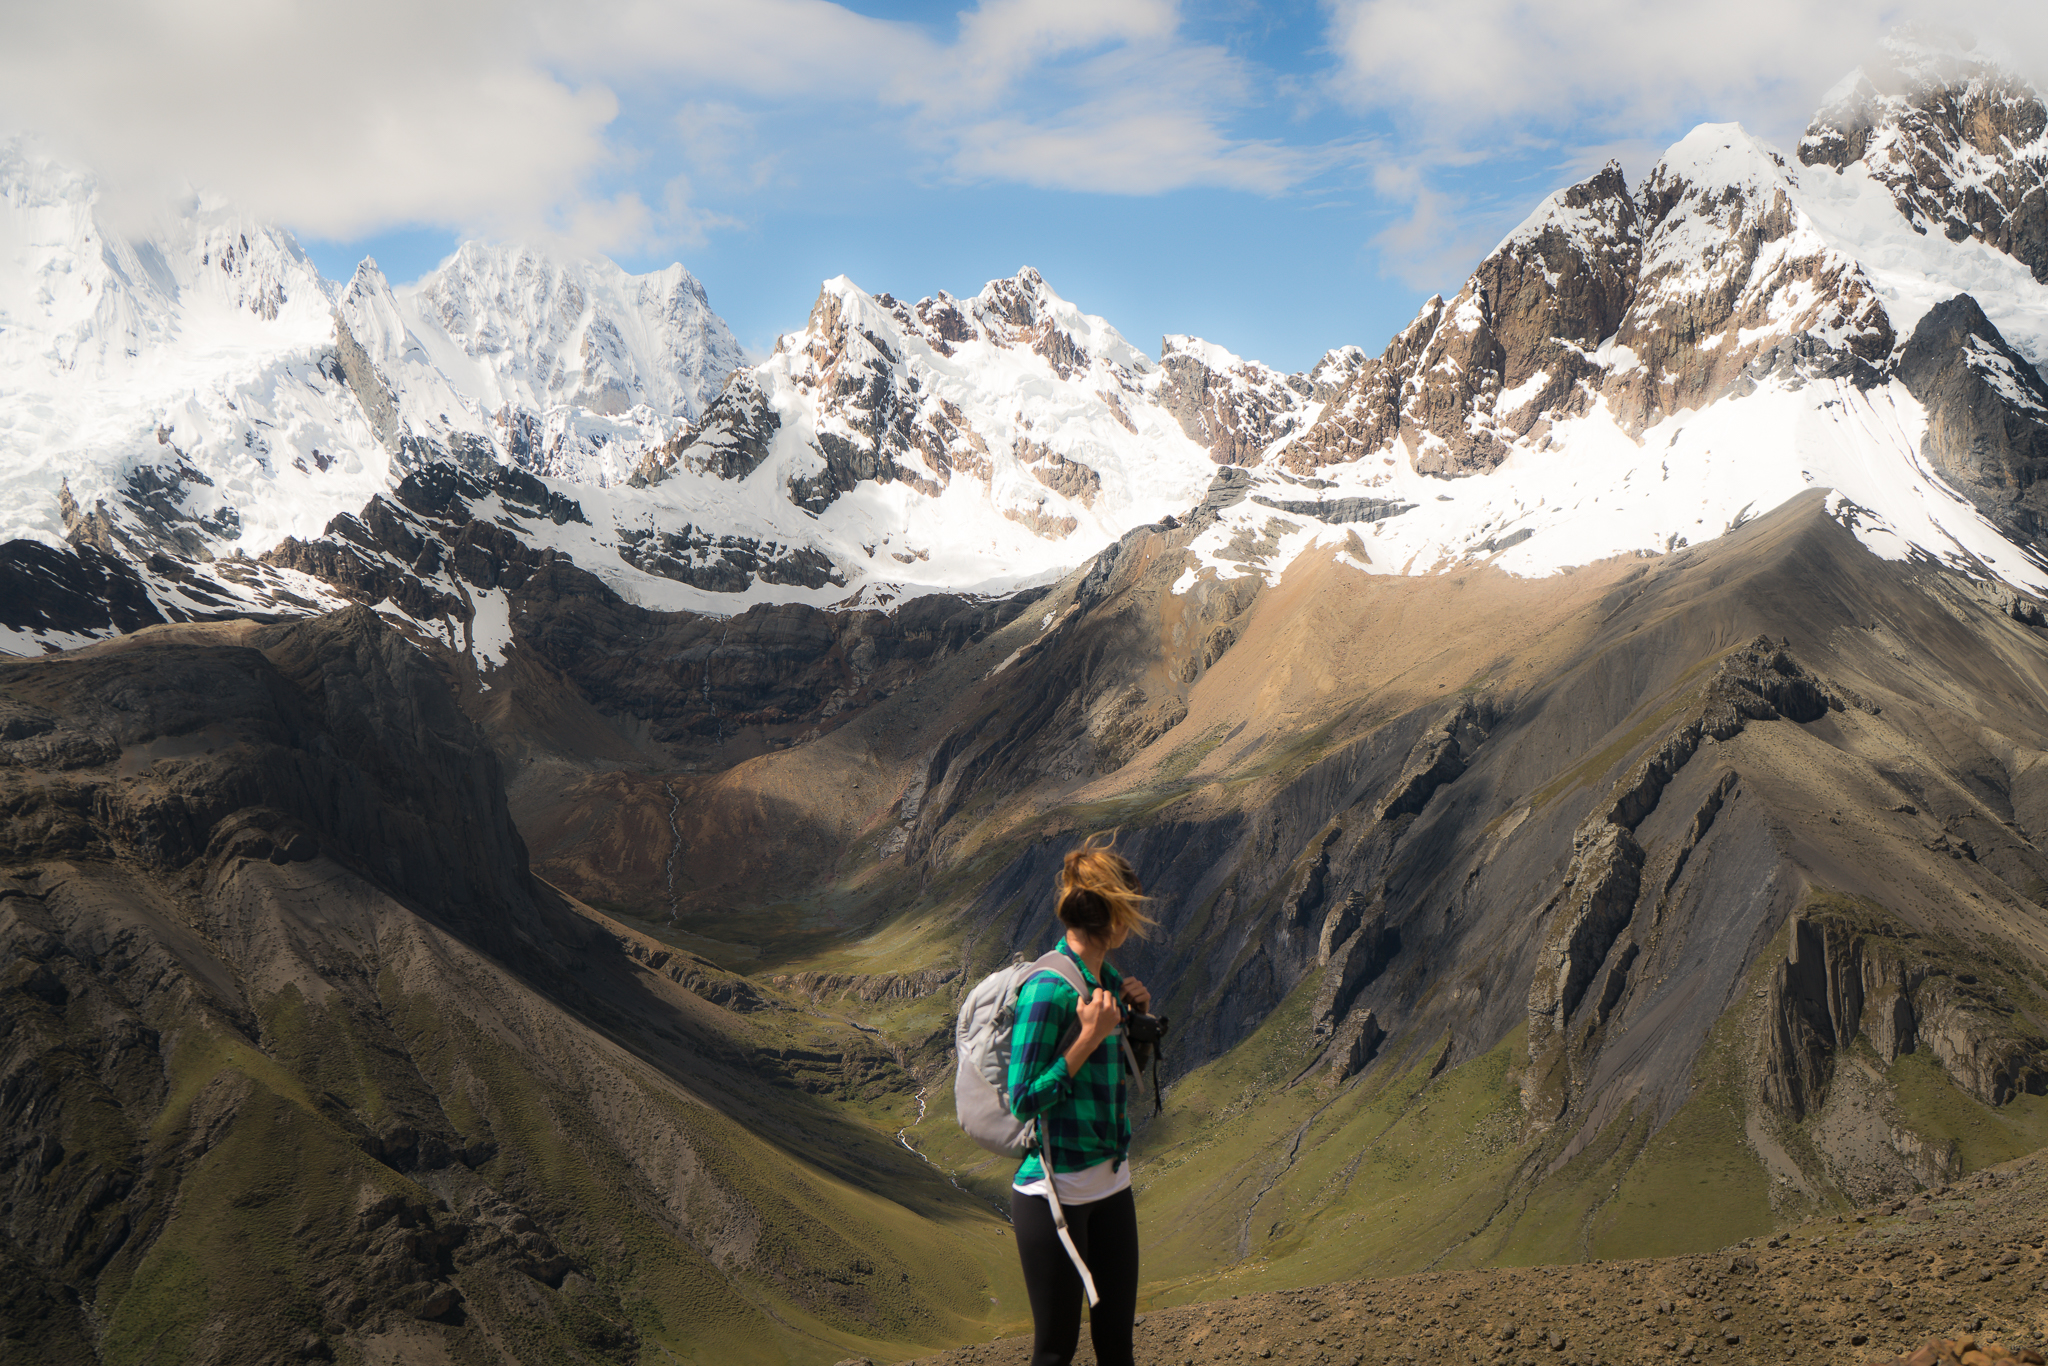 Views from the trail on the Cordillera Huayhuash Trek in Peru.